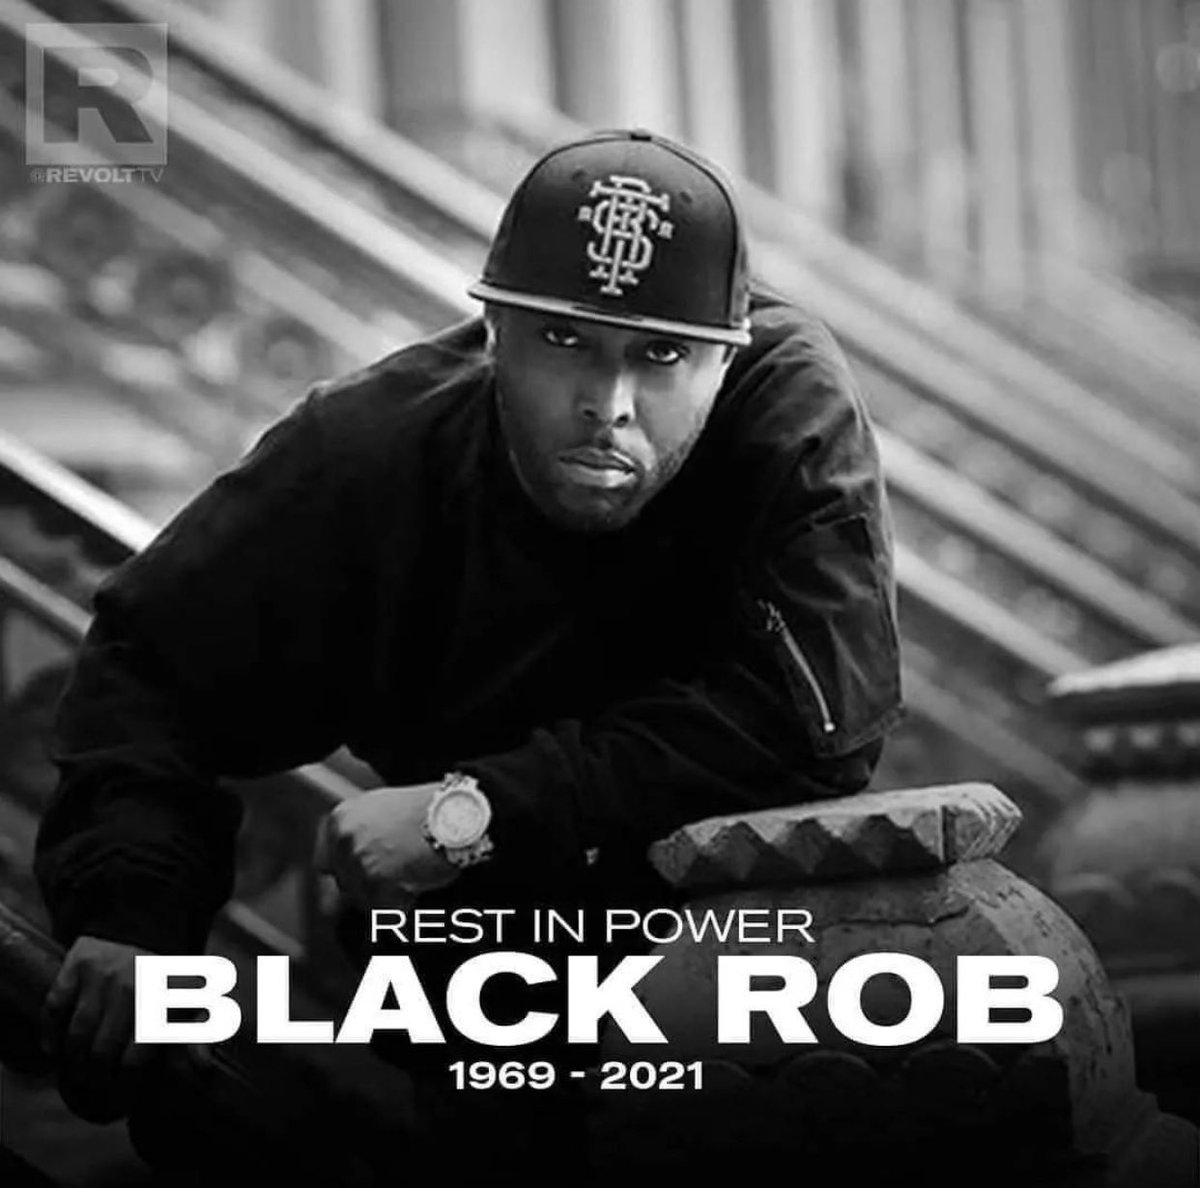 Robert Ross 

aka Black Rob

June 8, 1968 – April 17, 2021